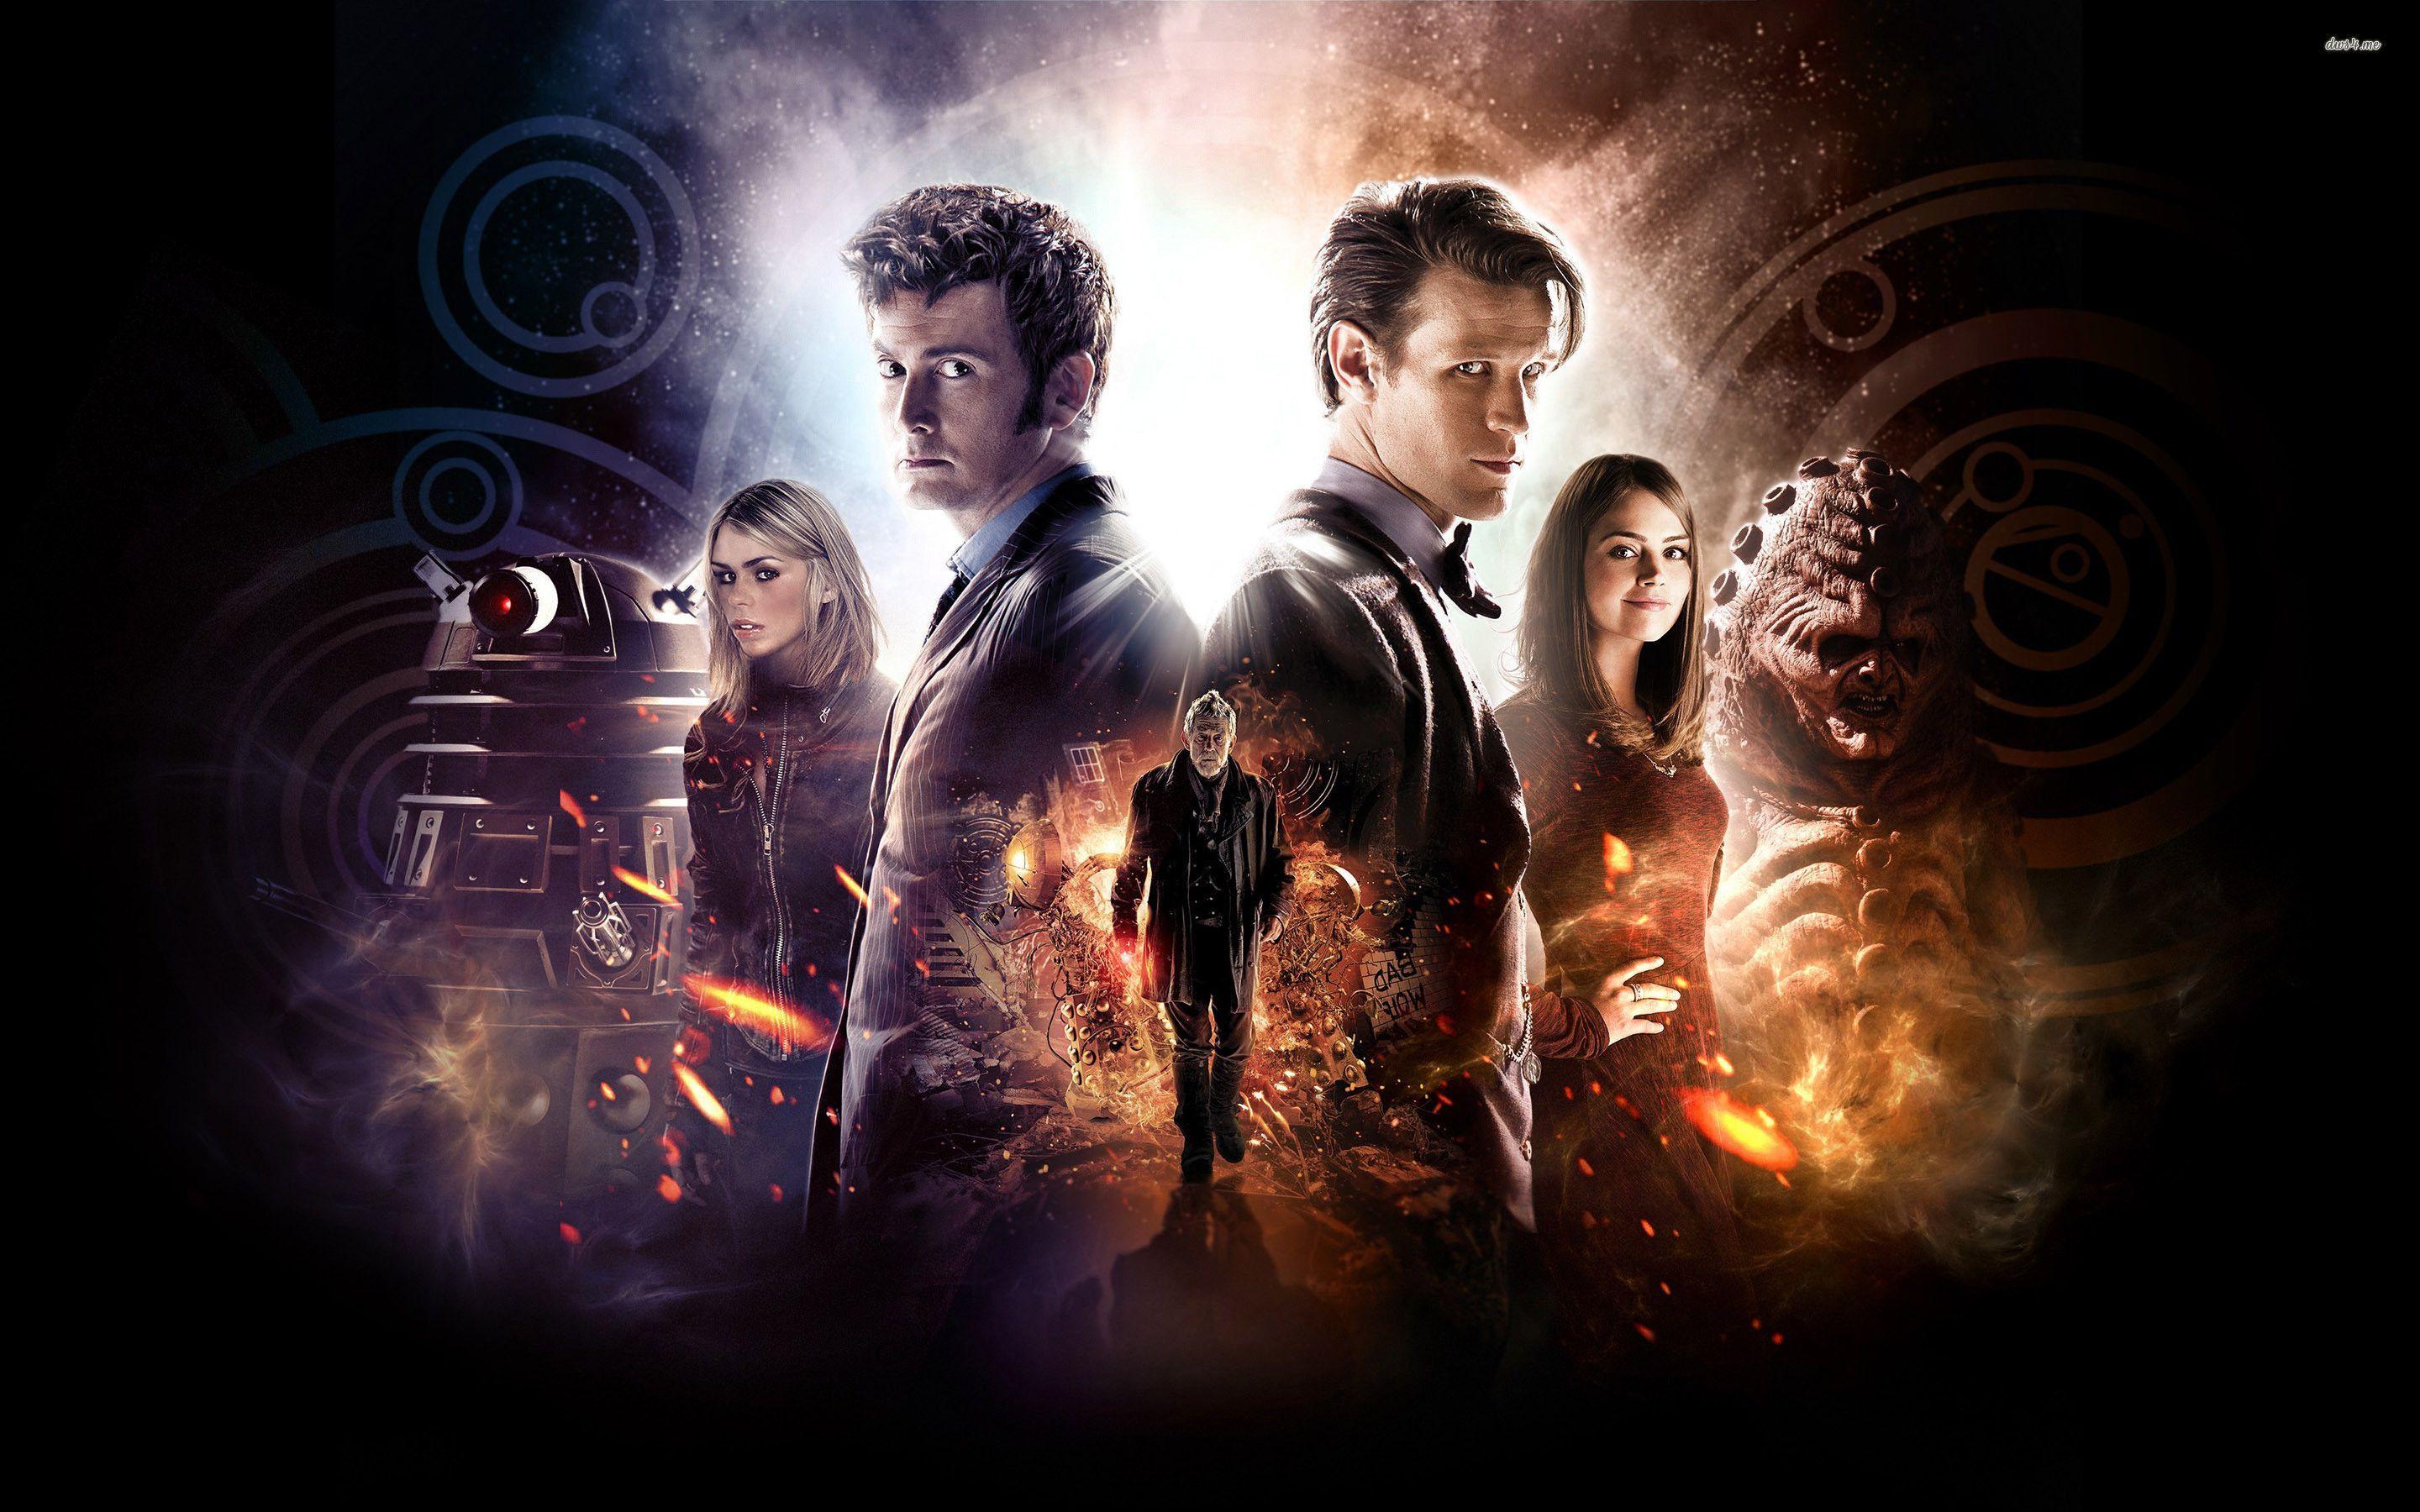 Preview Doctor Who Pics, Anita Gaitan for mobile and desktop